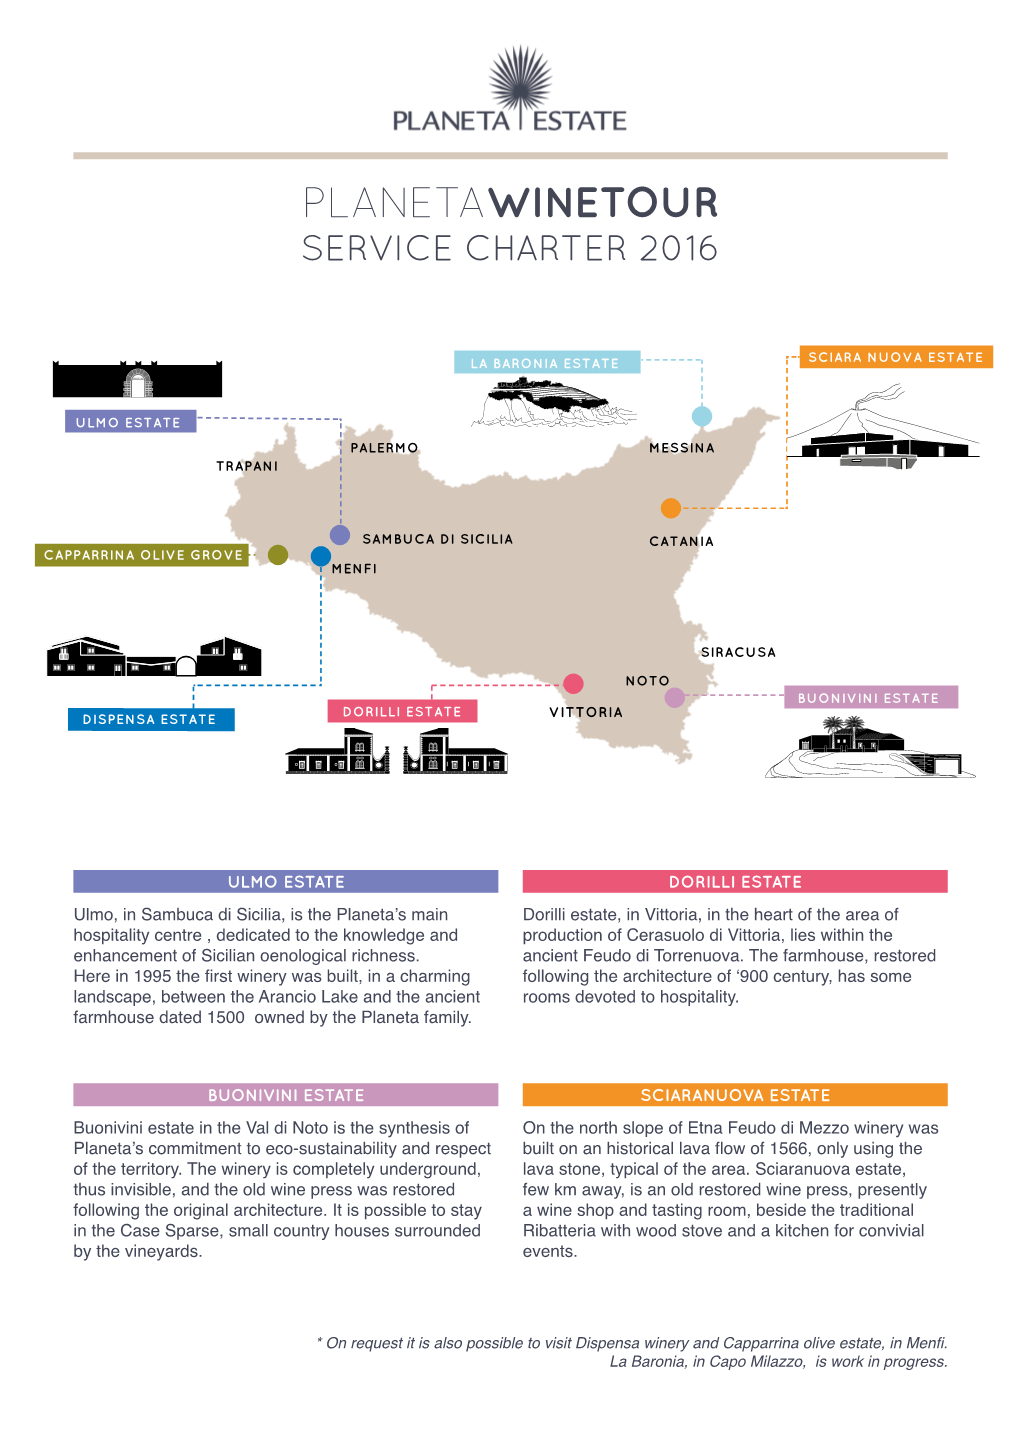 Planetawinetour Service Charter 2016